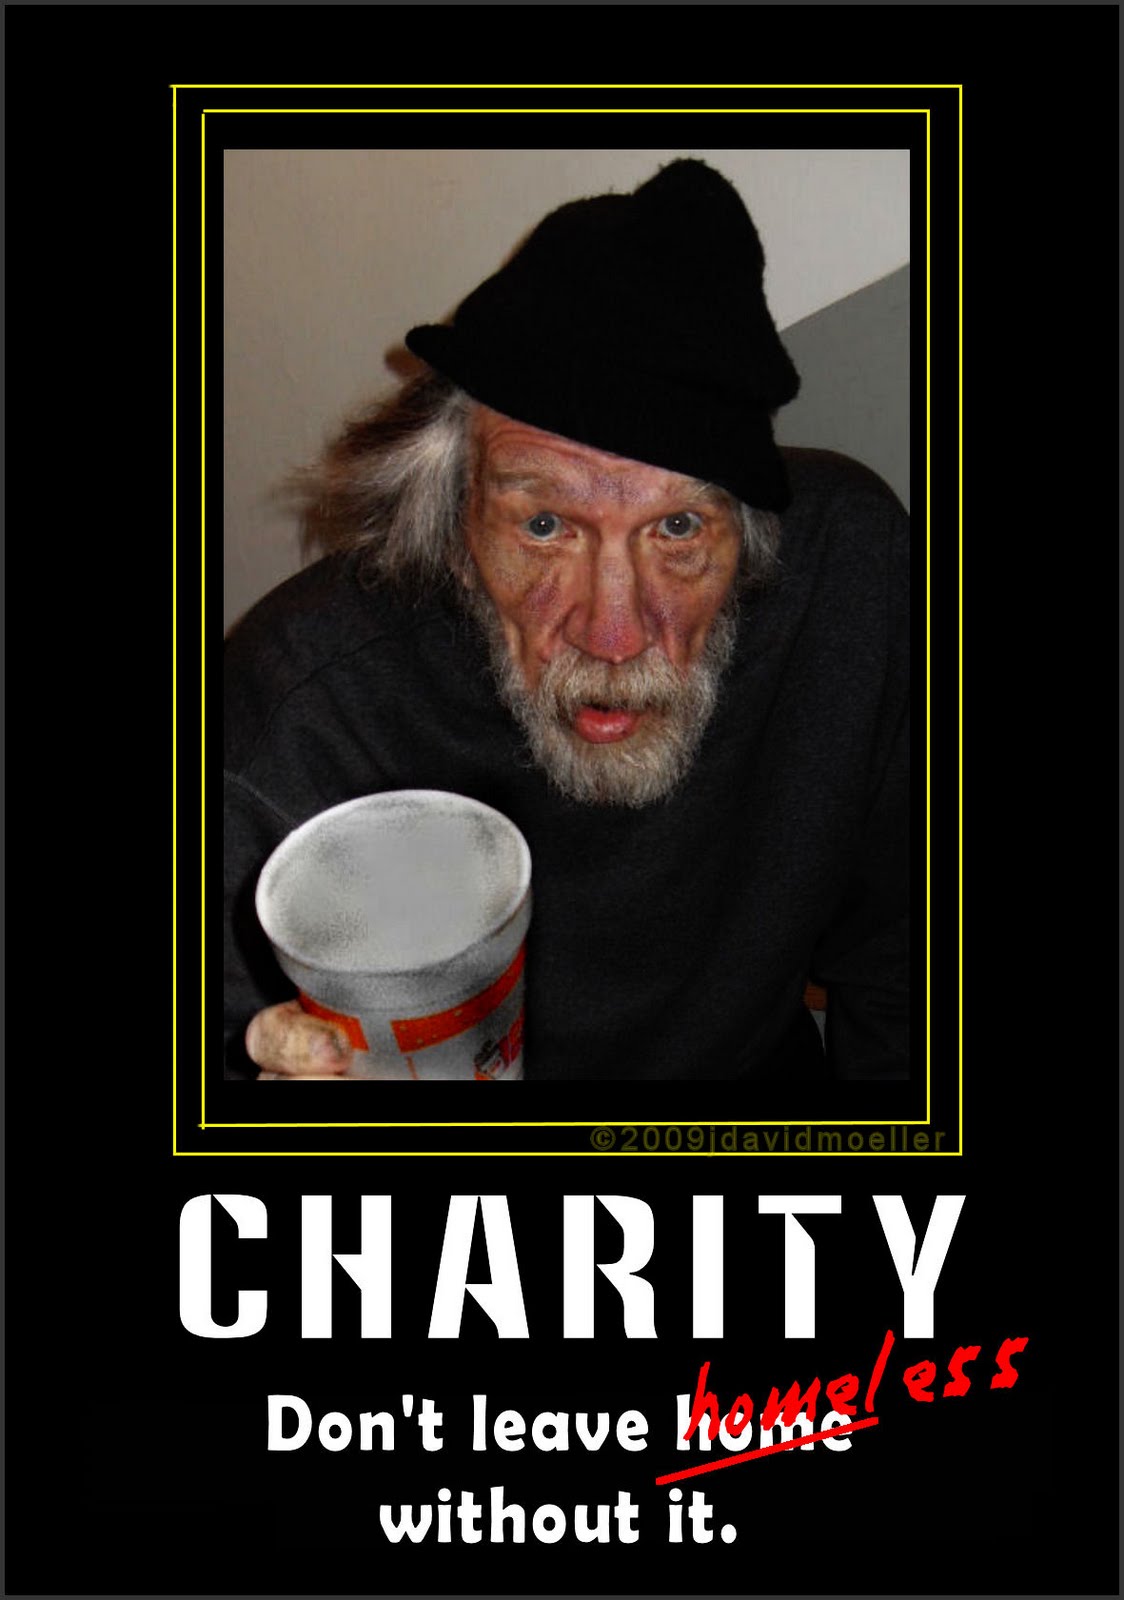 [SIGN+Charity+homeless+wo+it.jpg]